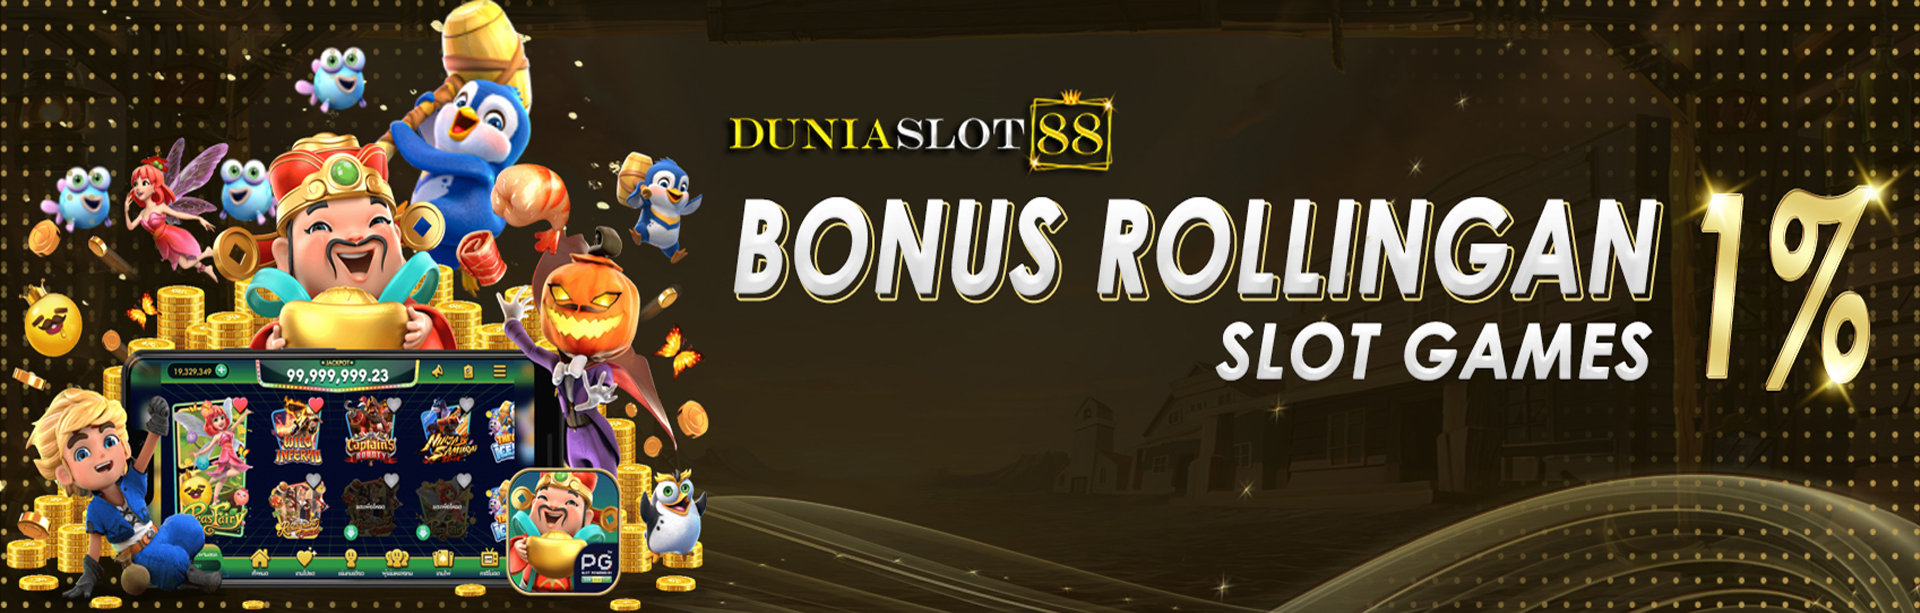 Bonus Rollingan Slot Online 1%